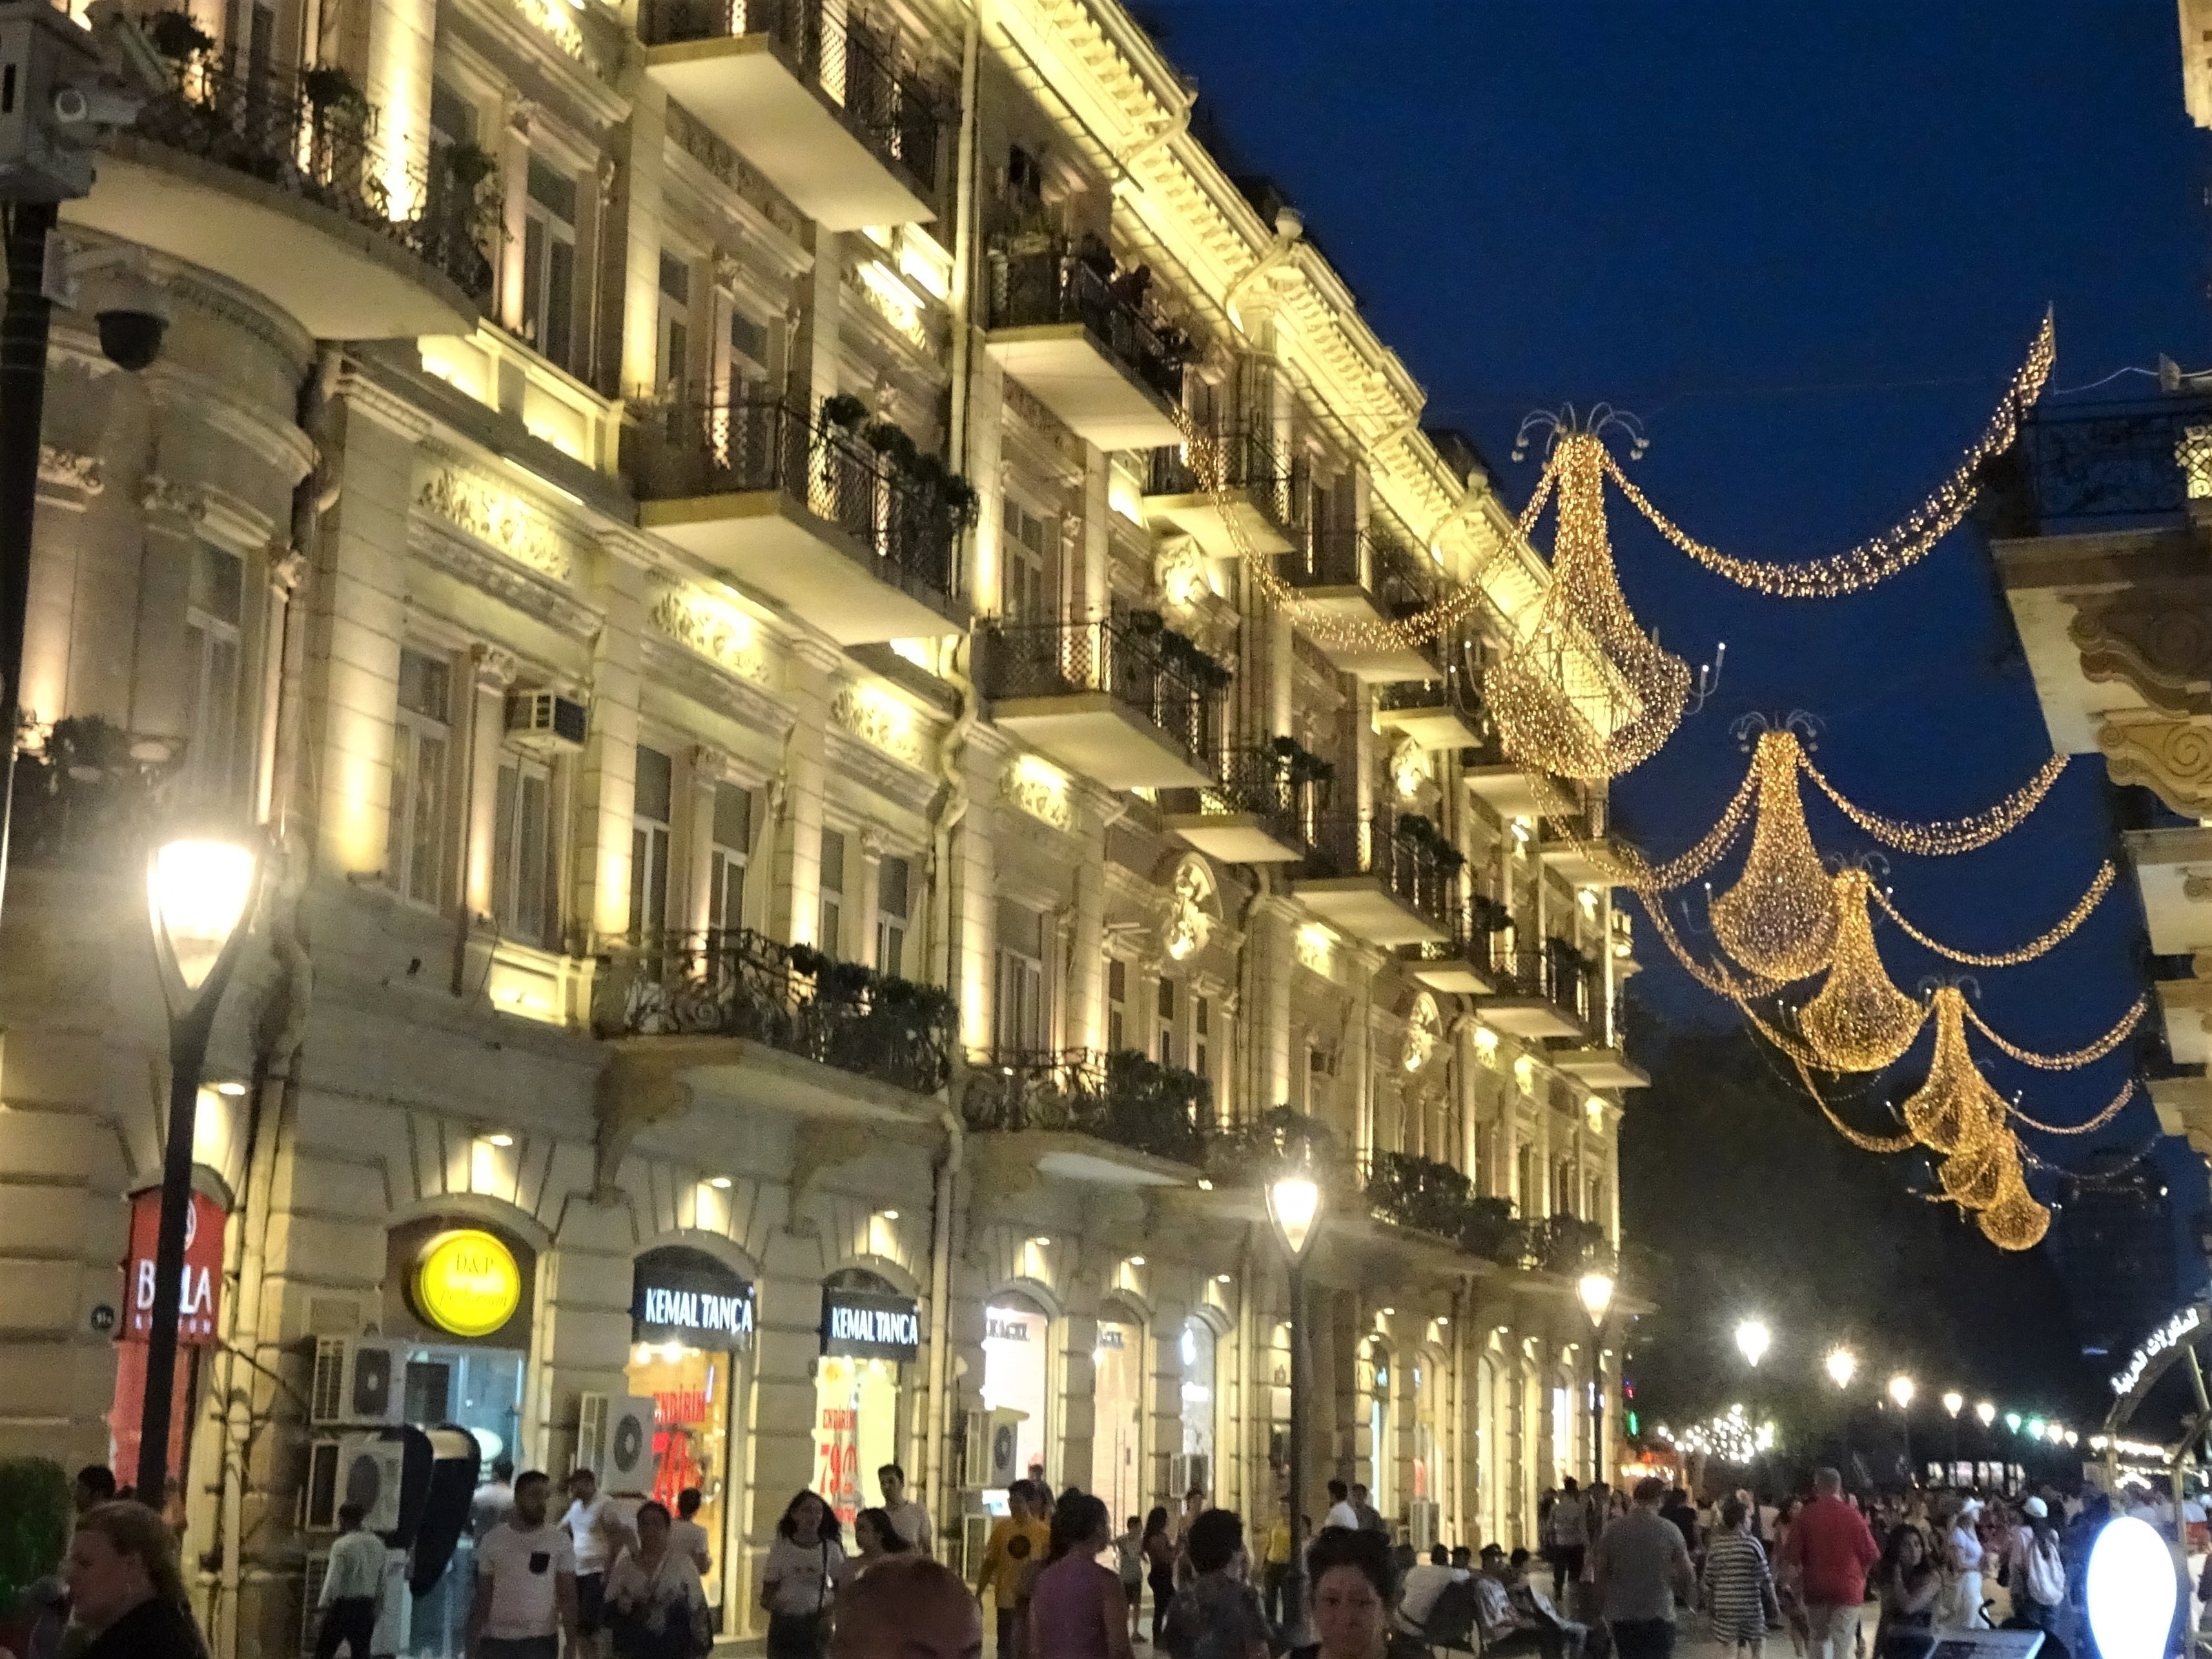 Nizami street is one of the main (shopping) streets in Baku.  #Azerbaijan  #TroveOnTuesday